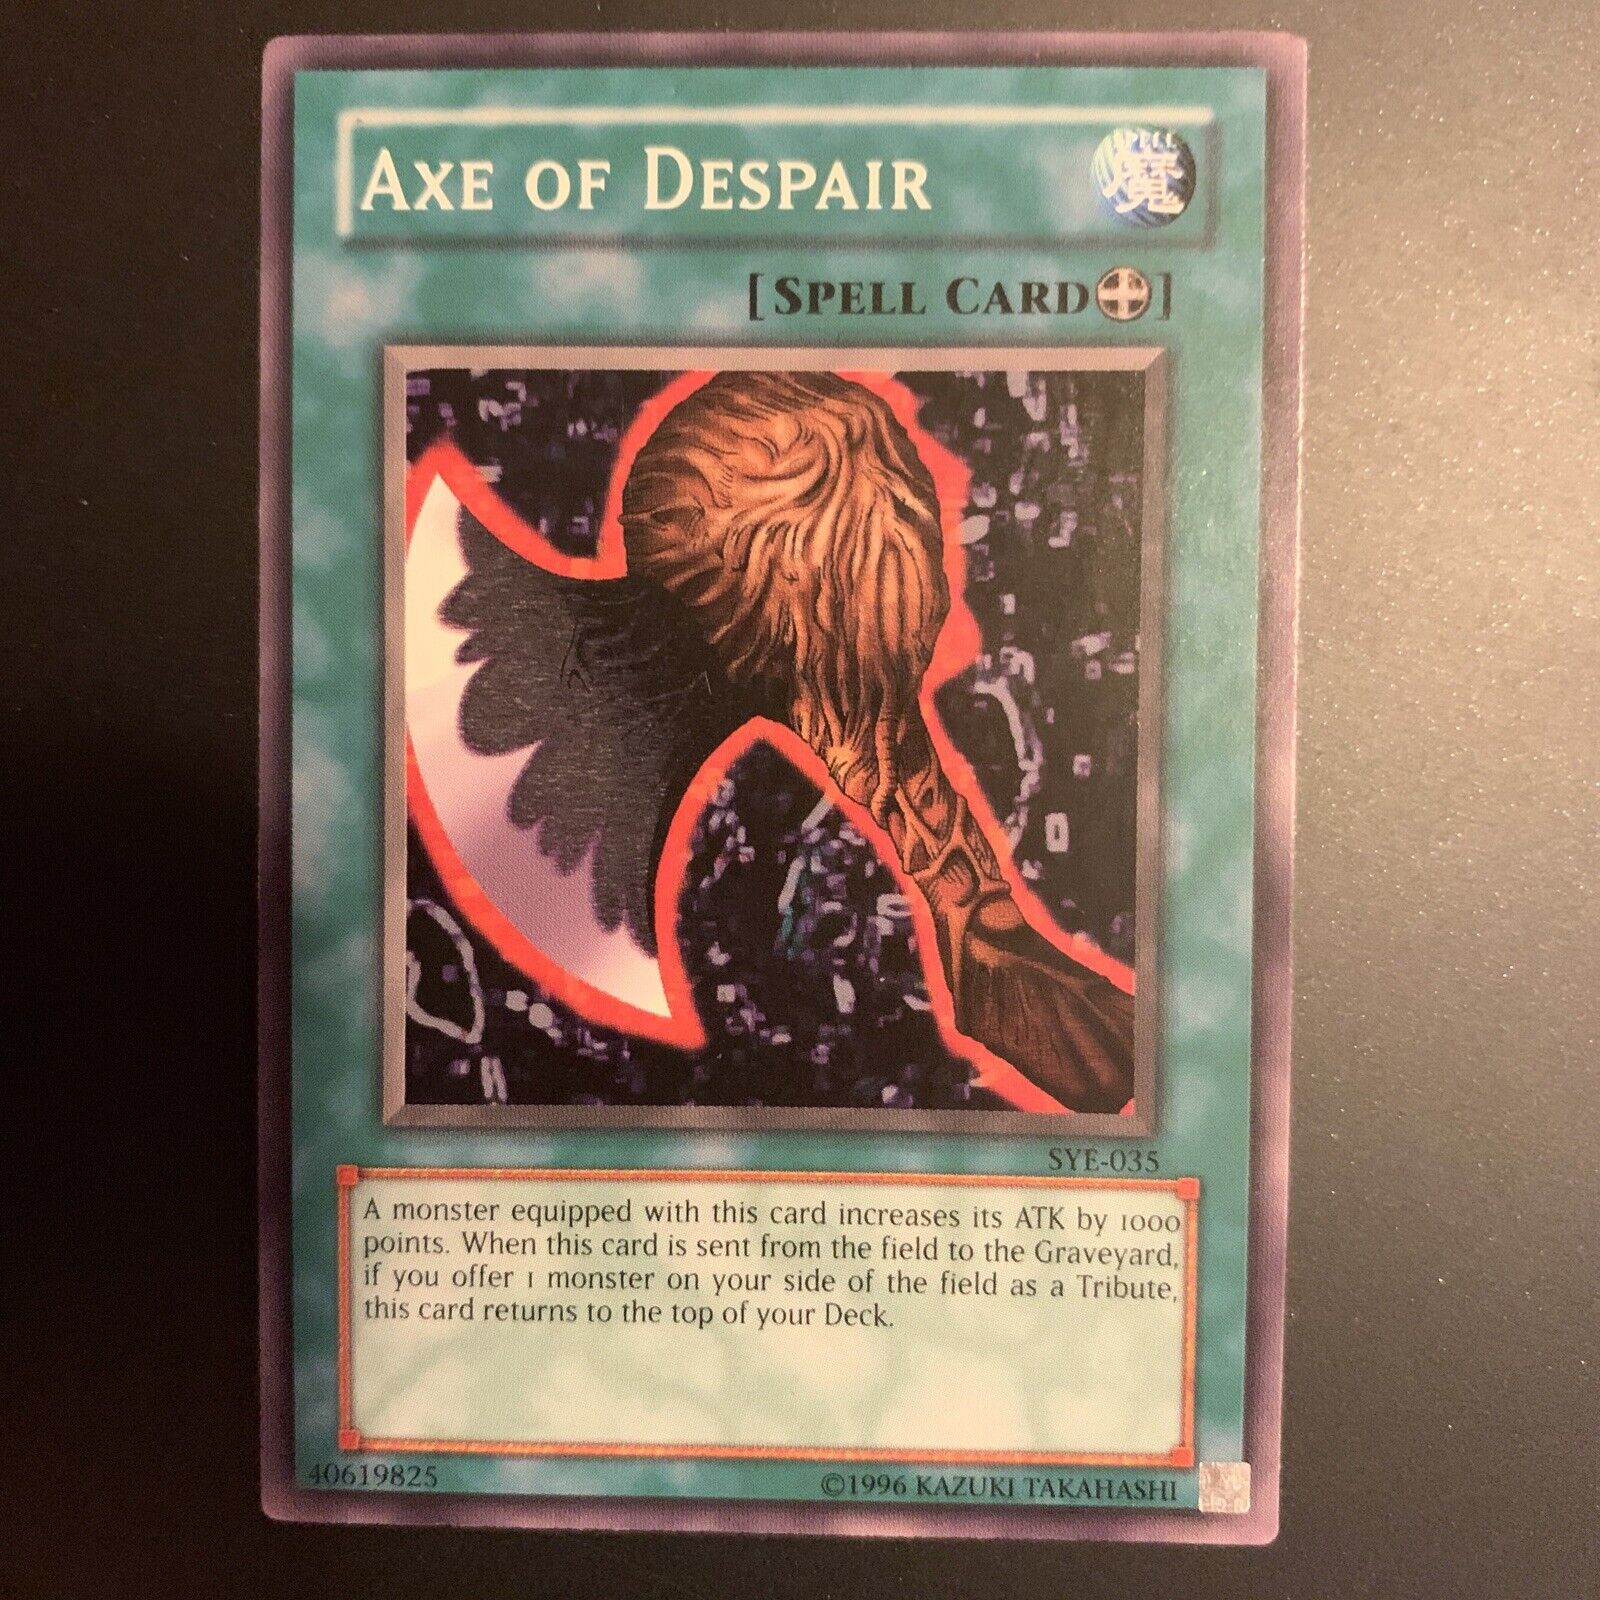 Yu-Gi-Oh Card collection 1996 Axe Of Despair Spell Card.